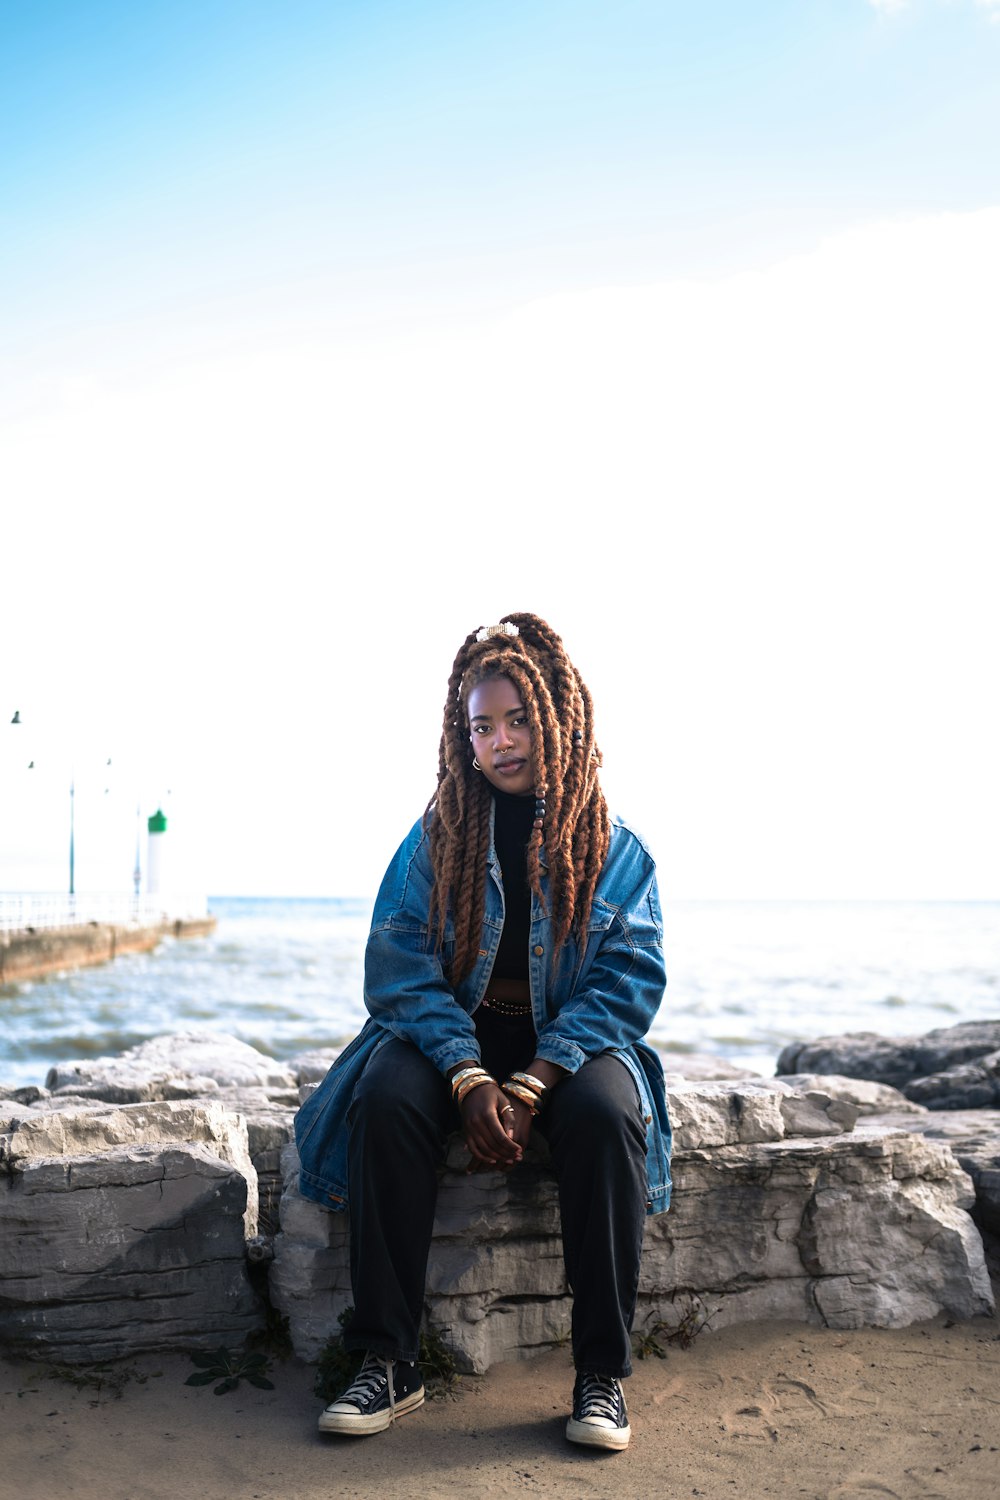 a woman with dreadlocks sitting on a rock near the ocean